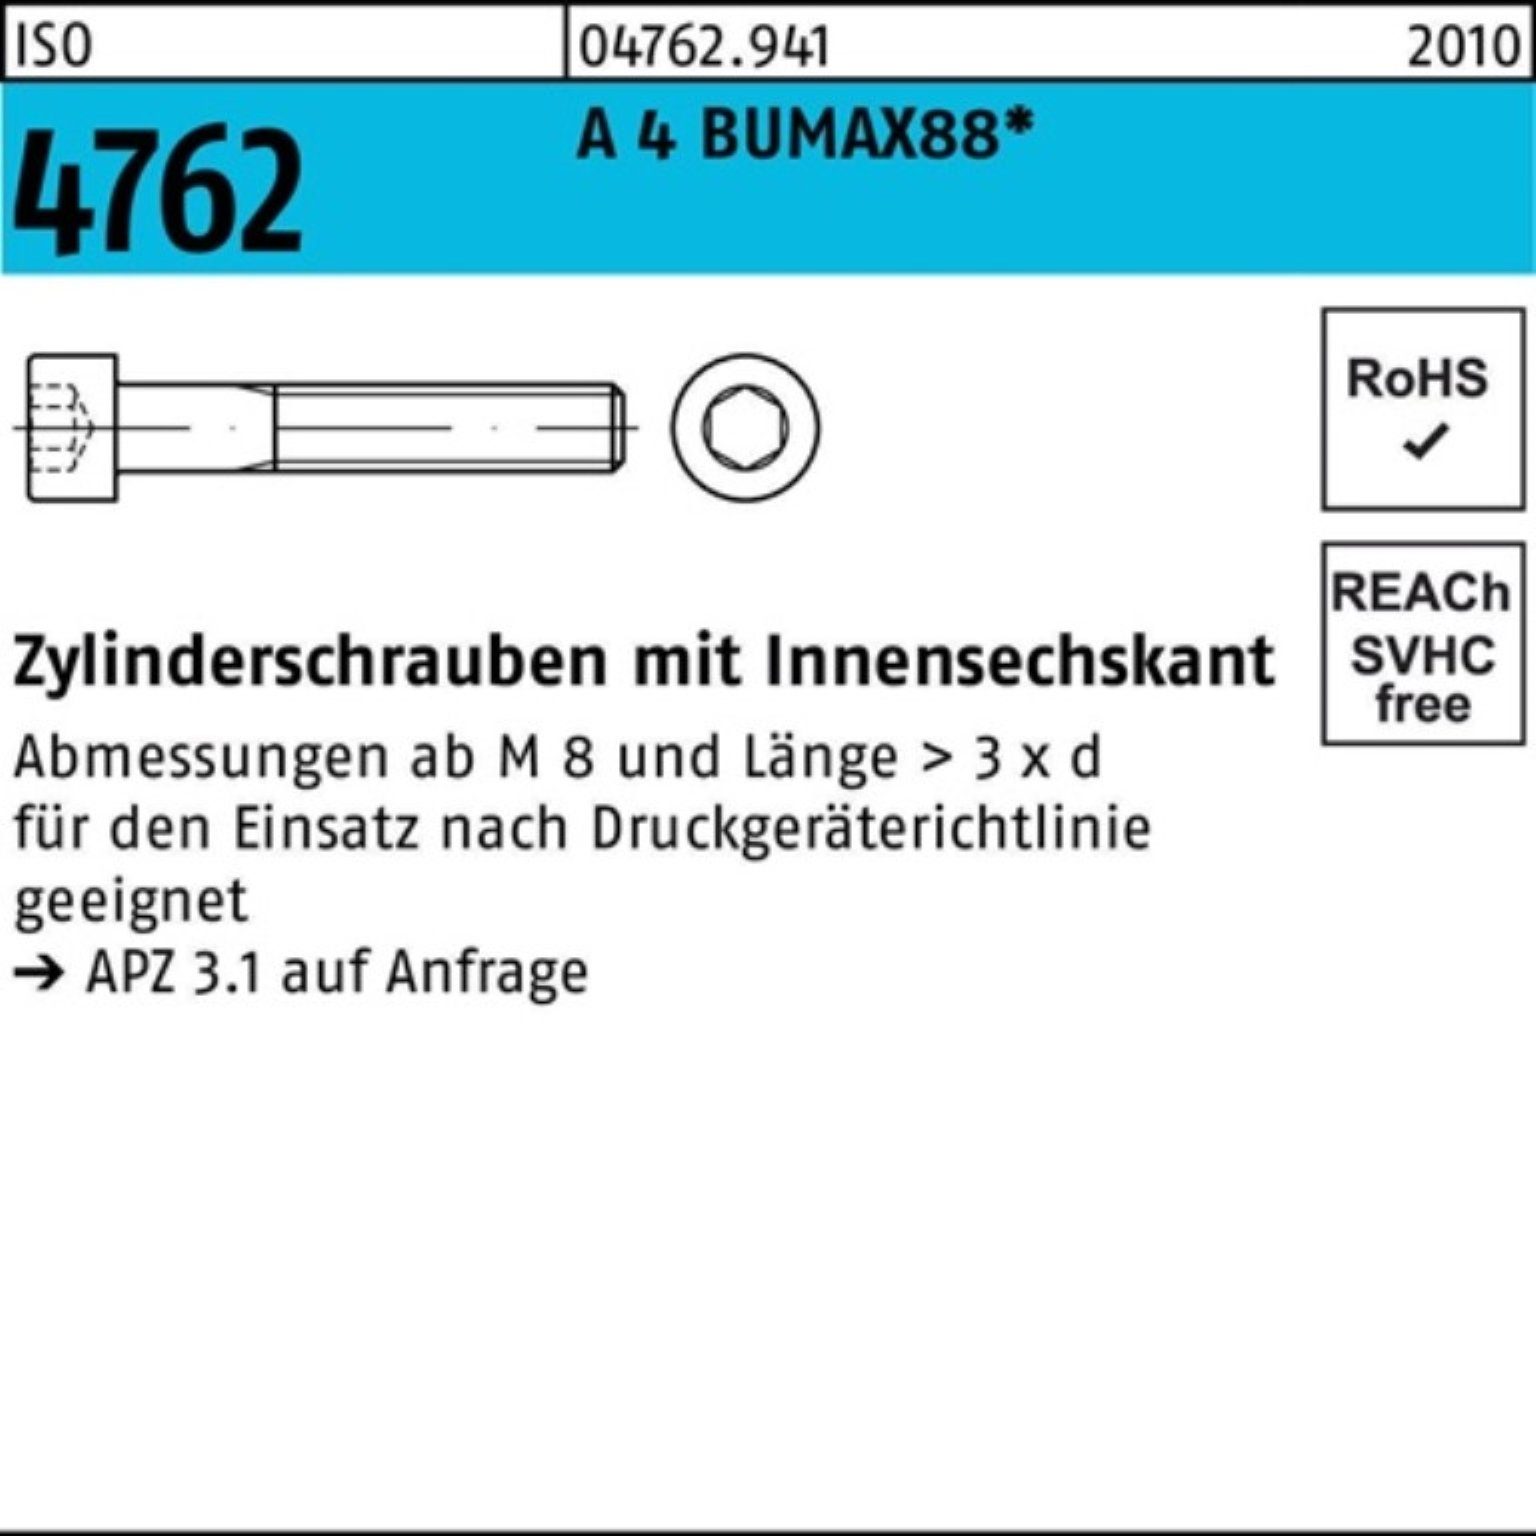 Bufab Zylinderschraube 100er Pack Zylinderschraube 100 4762 A ISO M5x 16 Innen-6kt 4 BUMAX88